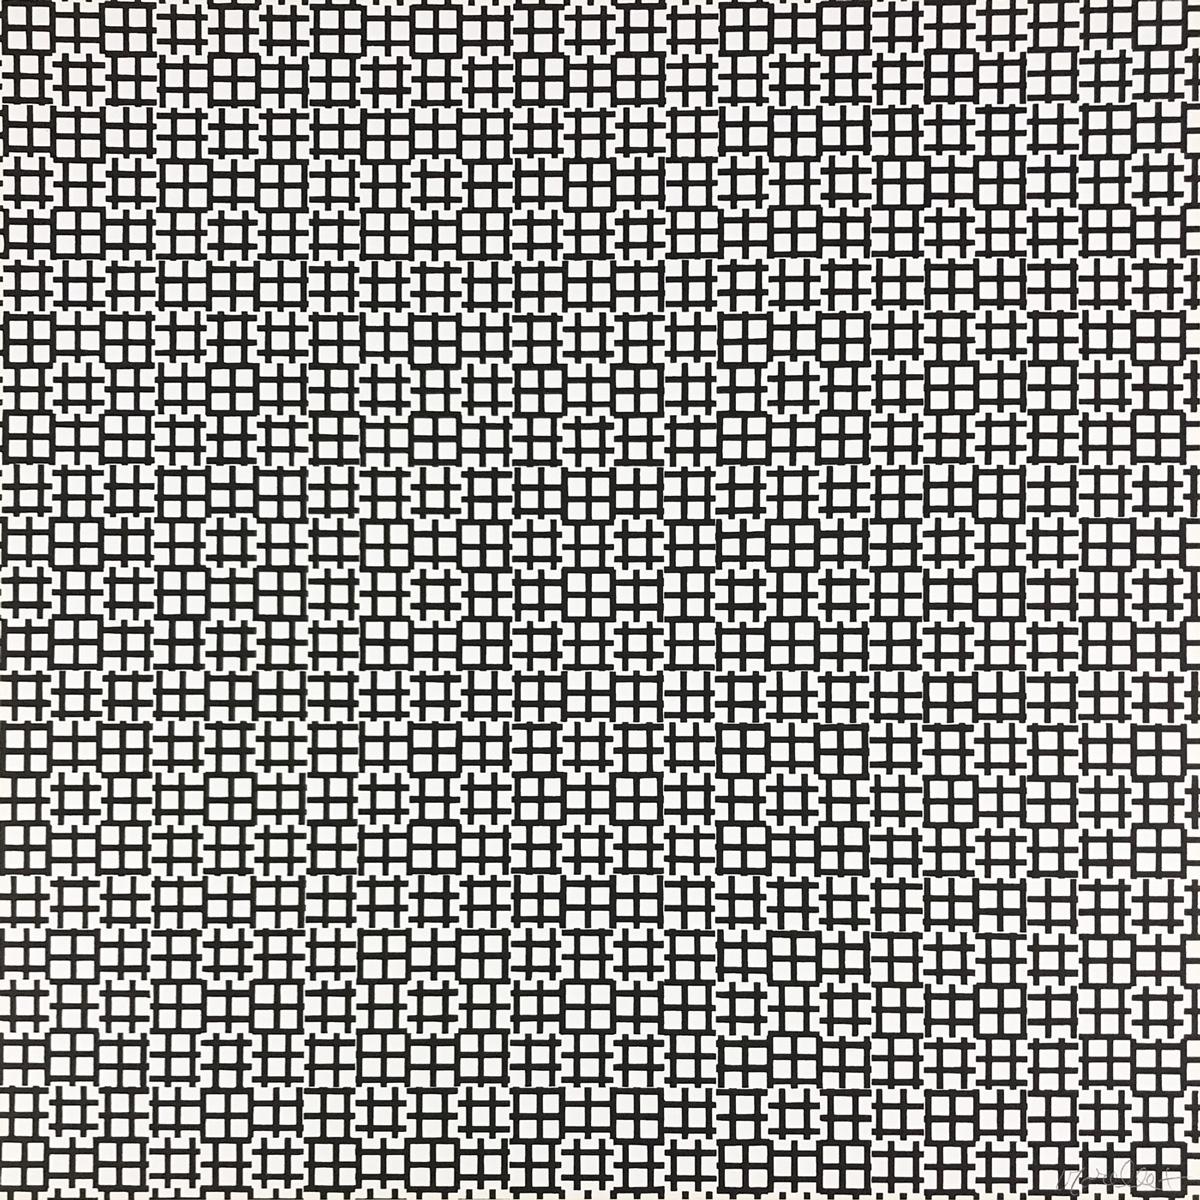 François Morellet, Trames: Portfolio of 8 Signed Screenprints, Abstract Art - Abstract Geometric Print by Francois Morellet